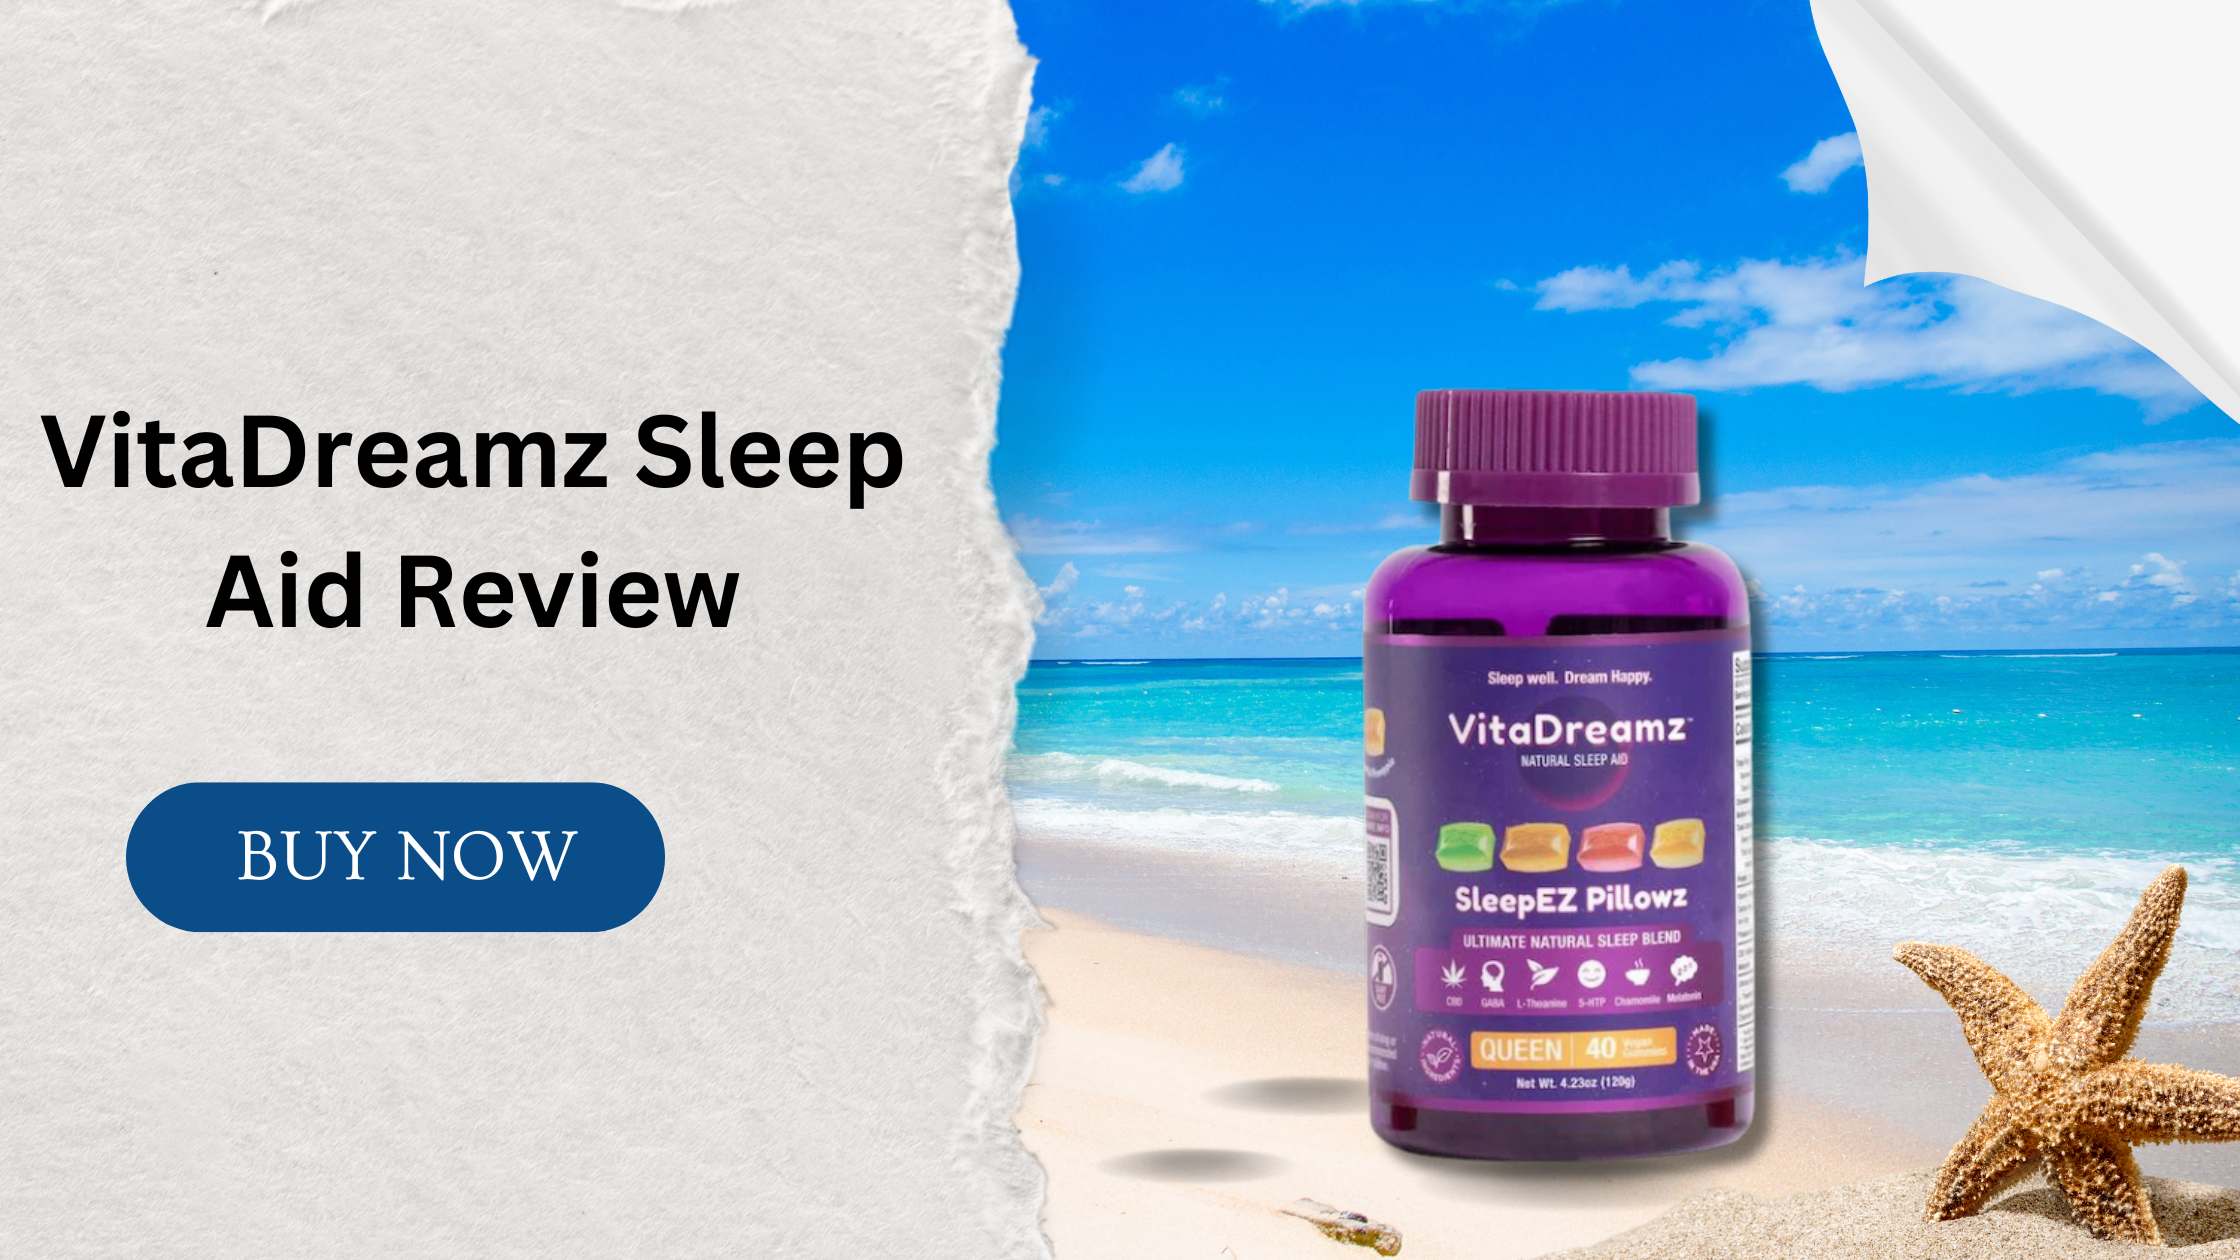 VitaDreamz Sleep Aid Review